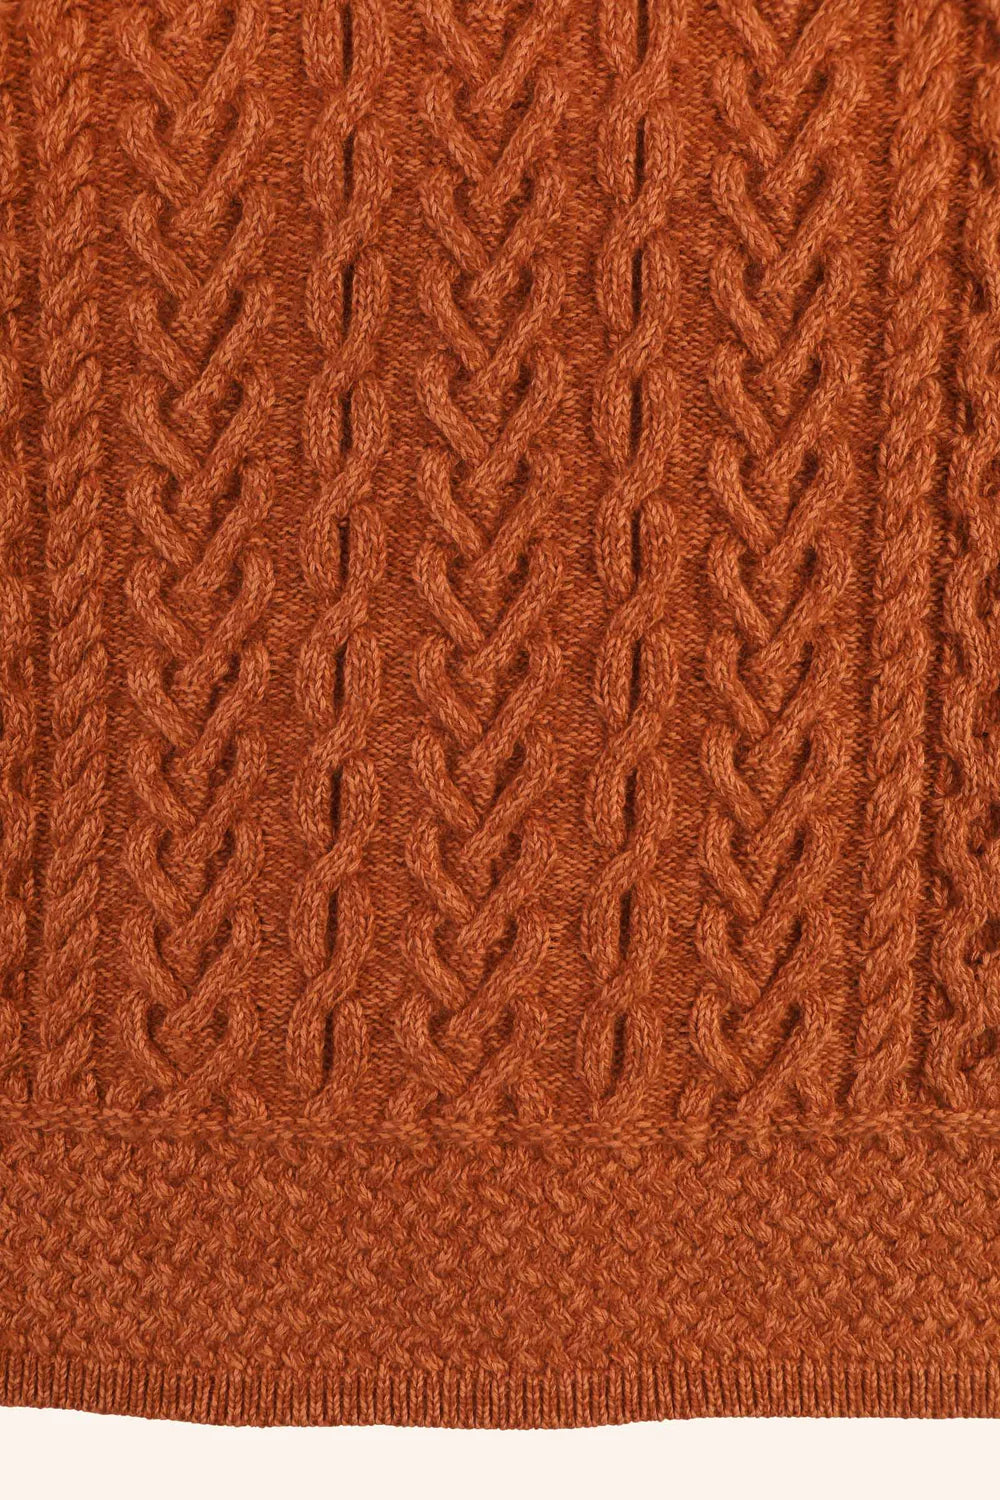 Meadows Anjou Knit Cinnamon